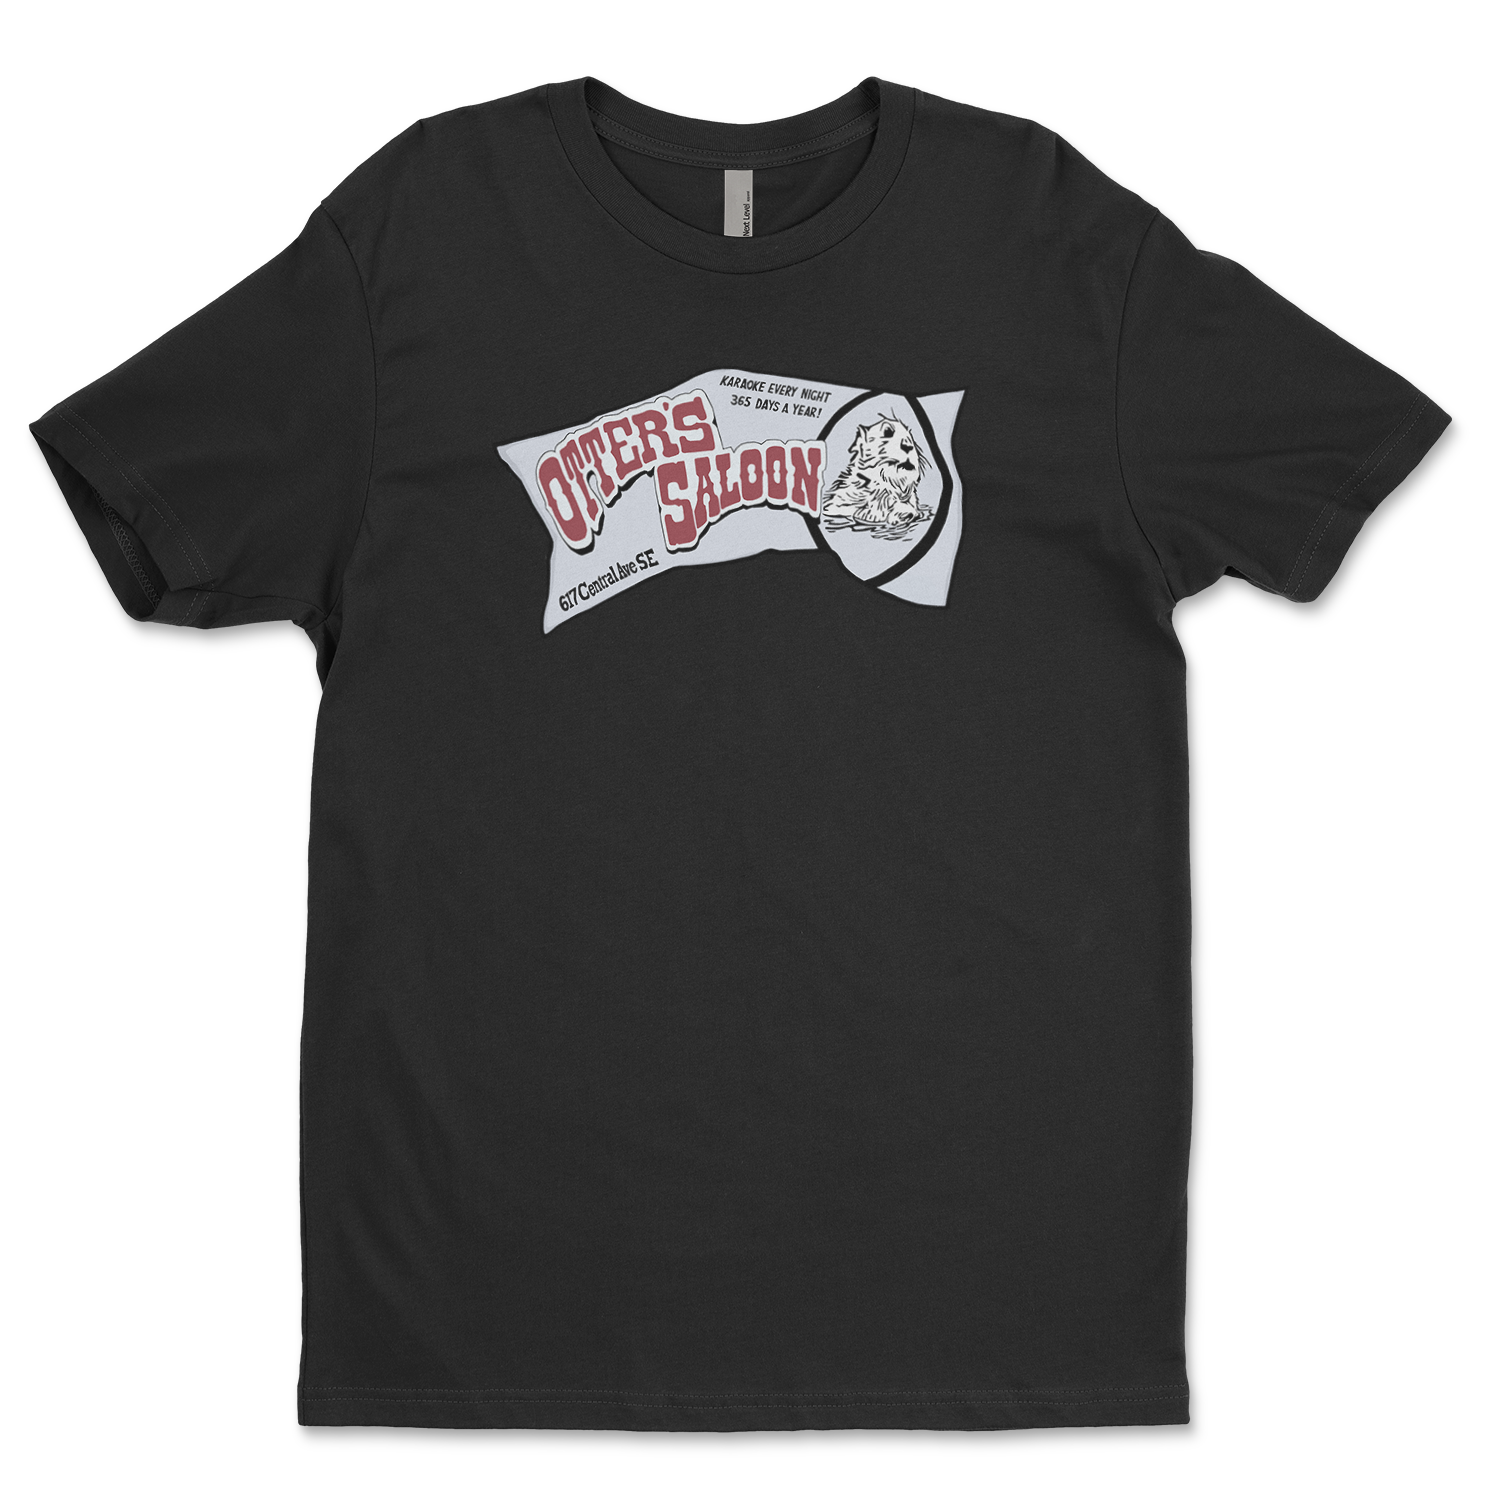 Otter's Saloon T-shirt